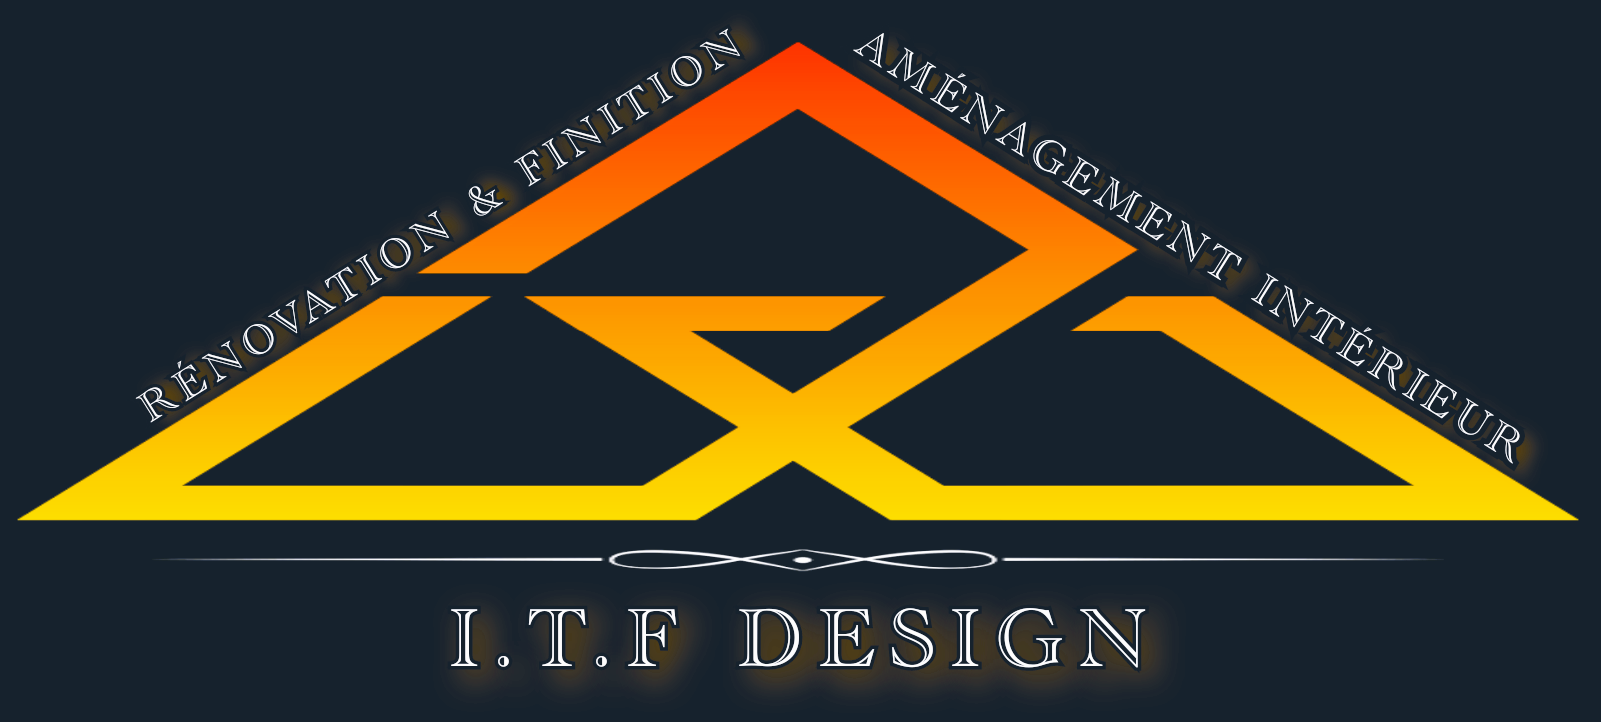 Société itf design